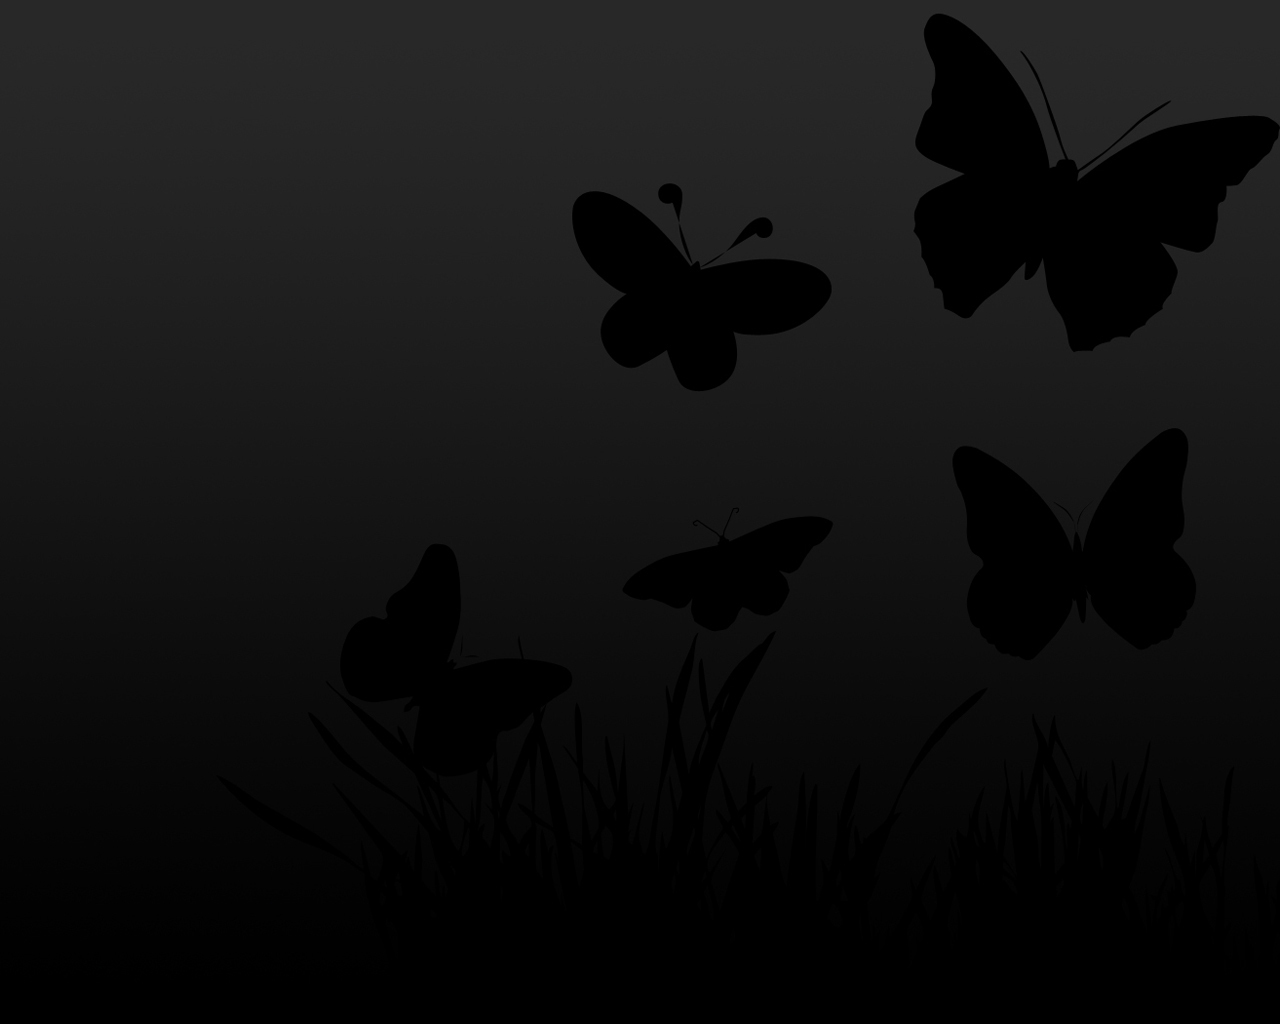 Black And White Butterfly Wallpaper For Desktop